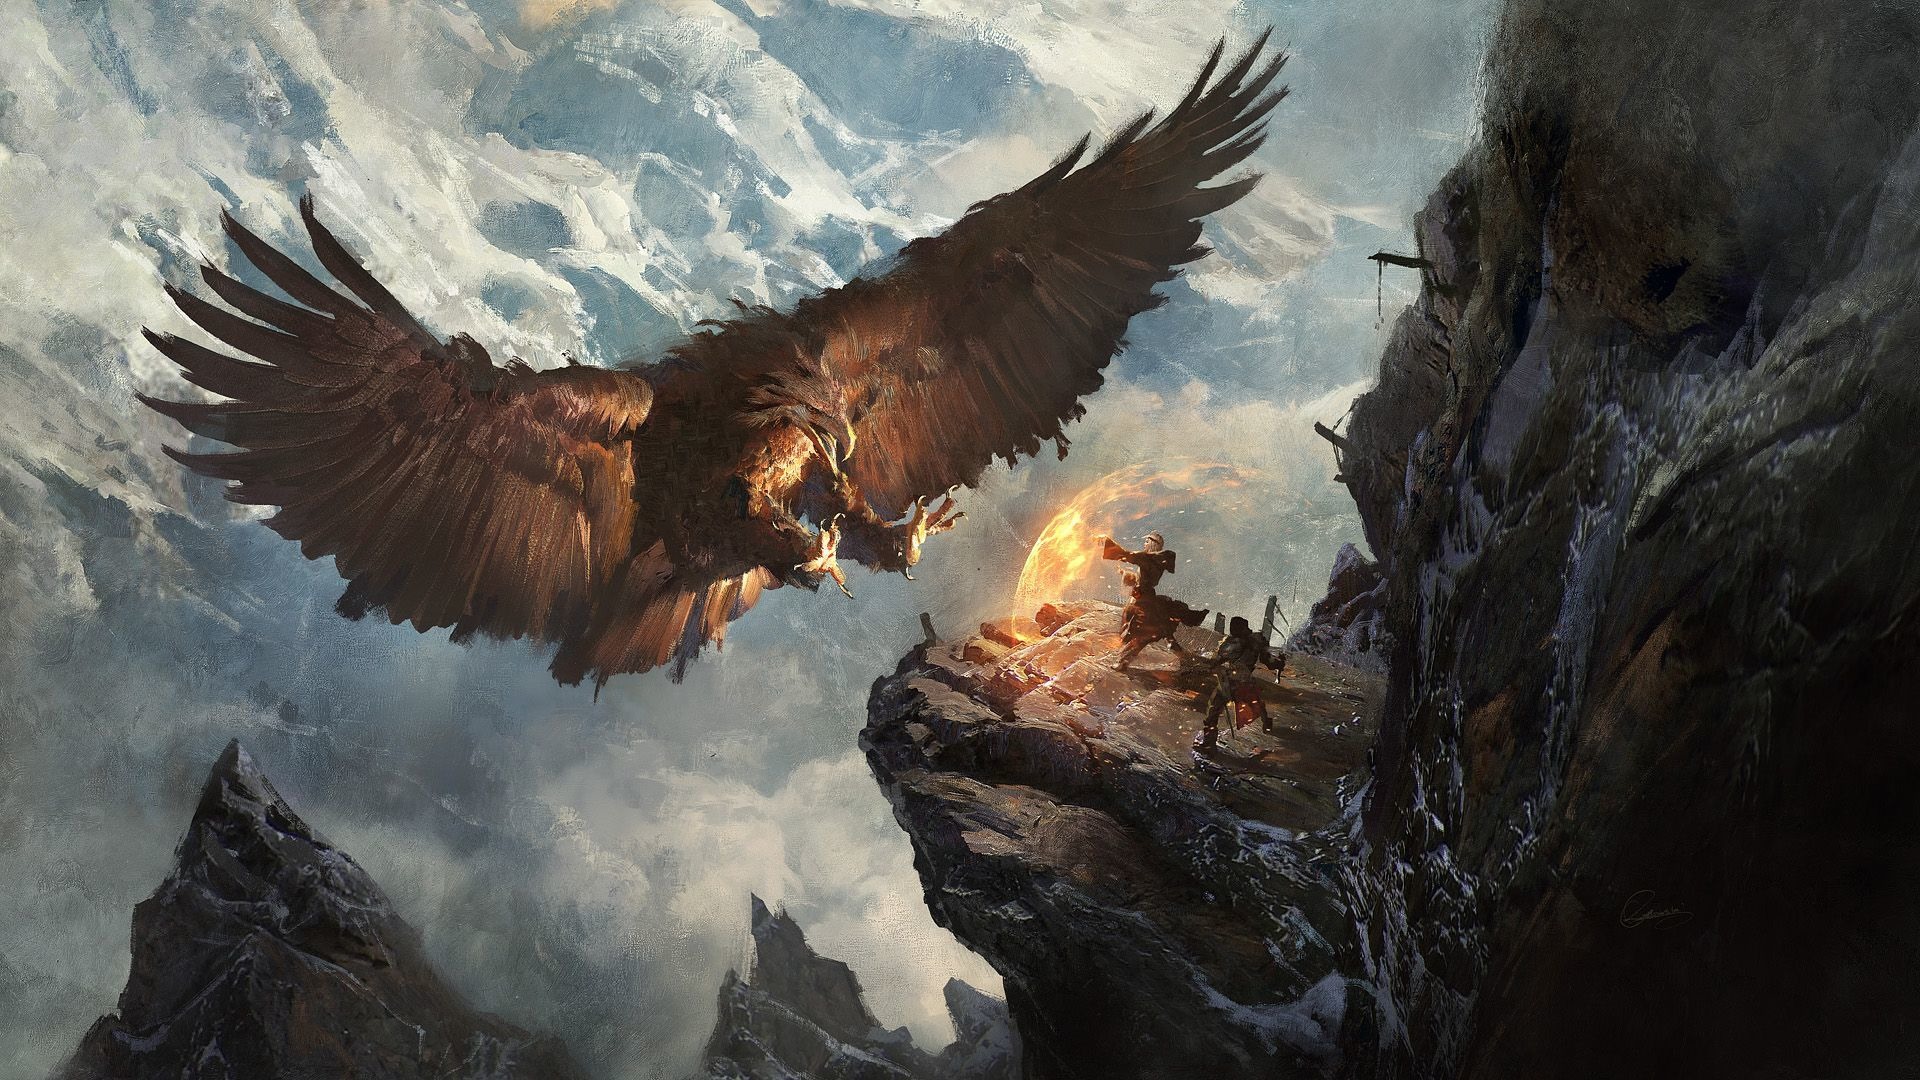 Eagle, fantasy, warrior, art wallpaper, HD image, picture, background, fce1a0